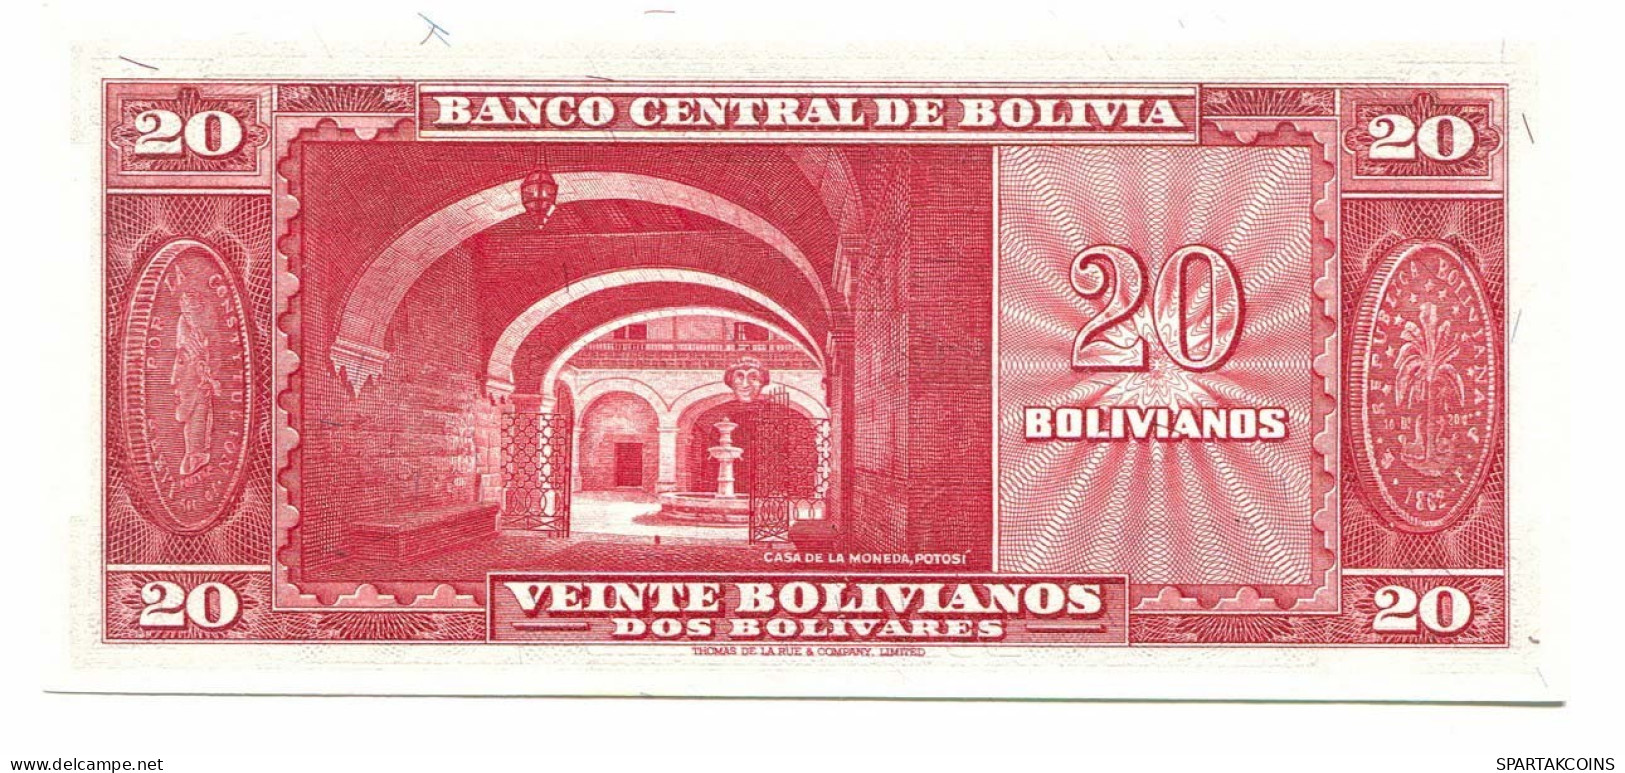 BOLIVIA 20 BOLIVIANOS 1945 SERIE P AUNC Paper Money Banknote #P10798X.4 - [11] Emissions Locales